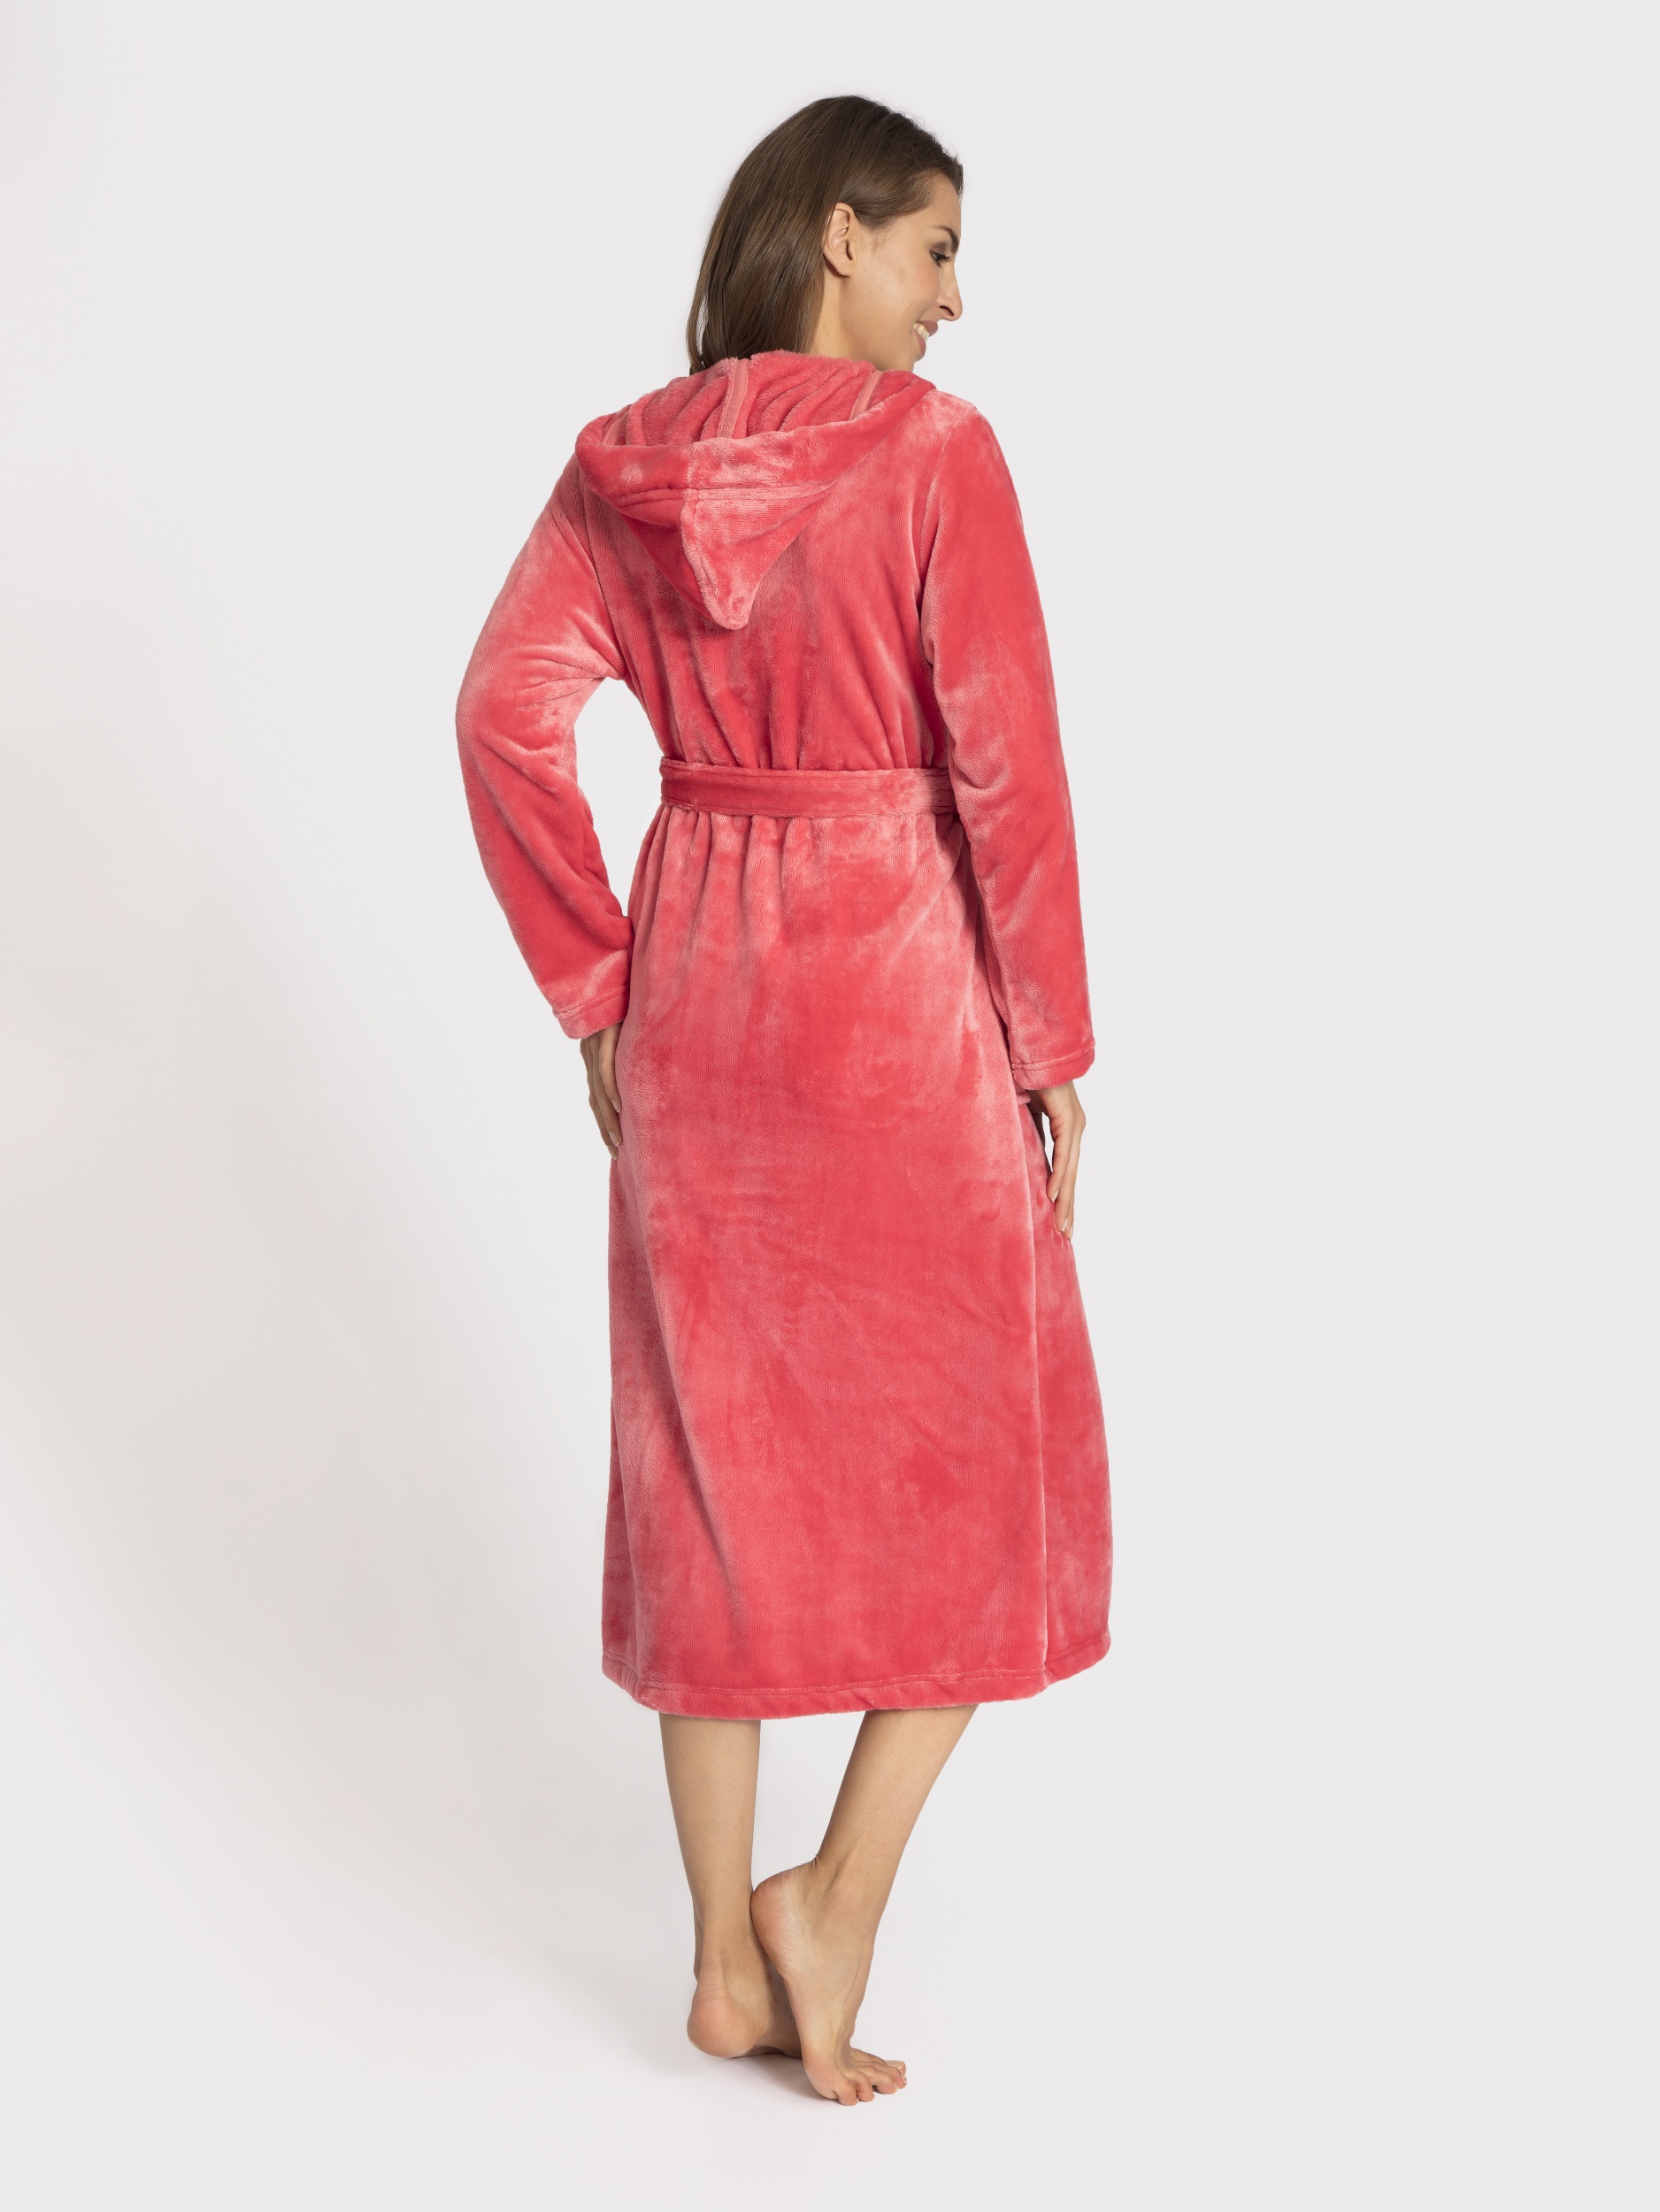 ontgrendelen Bekwaam Storing badjas dames lang roze achterkant 172636-144-6550-2 - TrendyWinter.nl